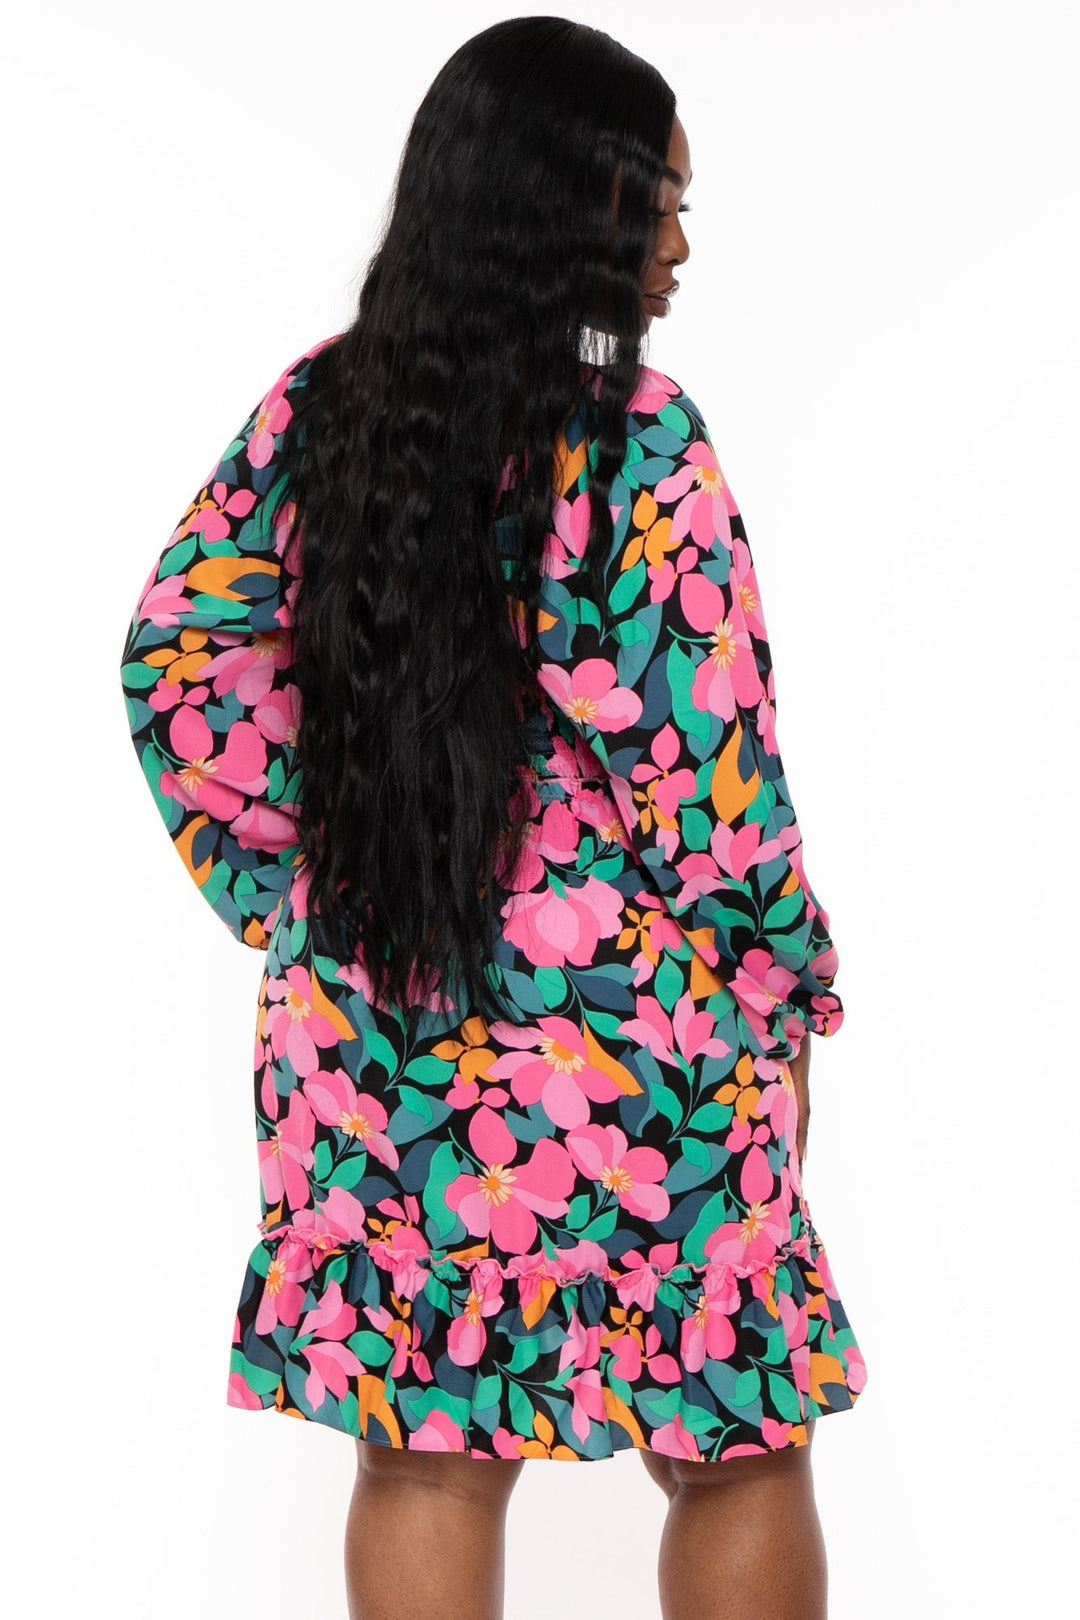 Jade by Jane Dresses Plus Size Laina Floral Smocked Ruffle Dress - Black